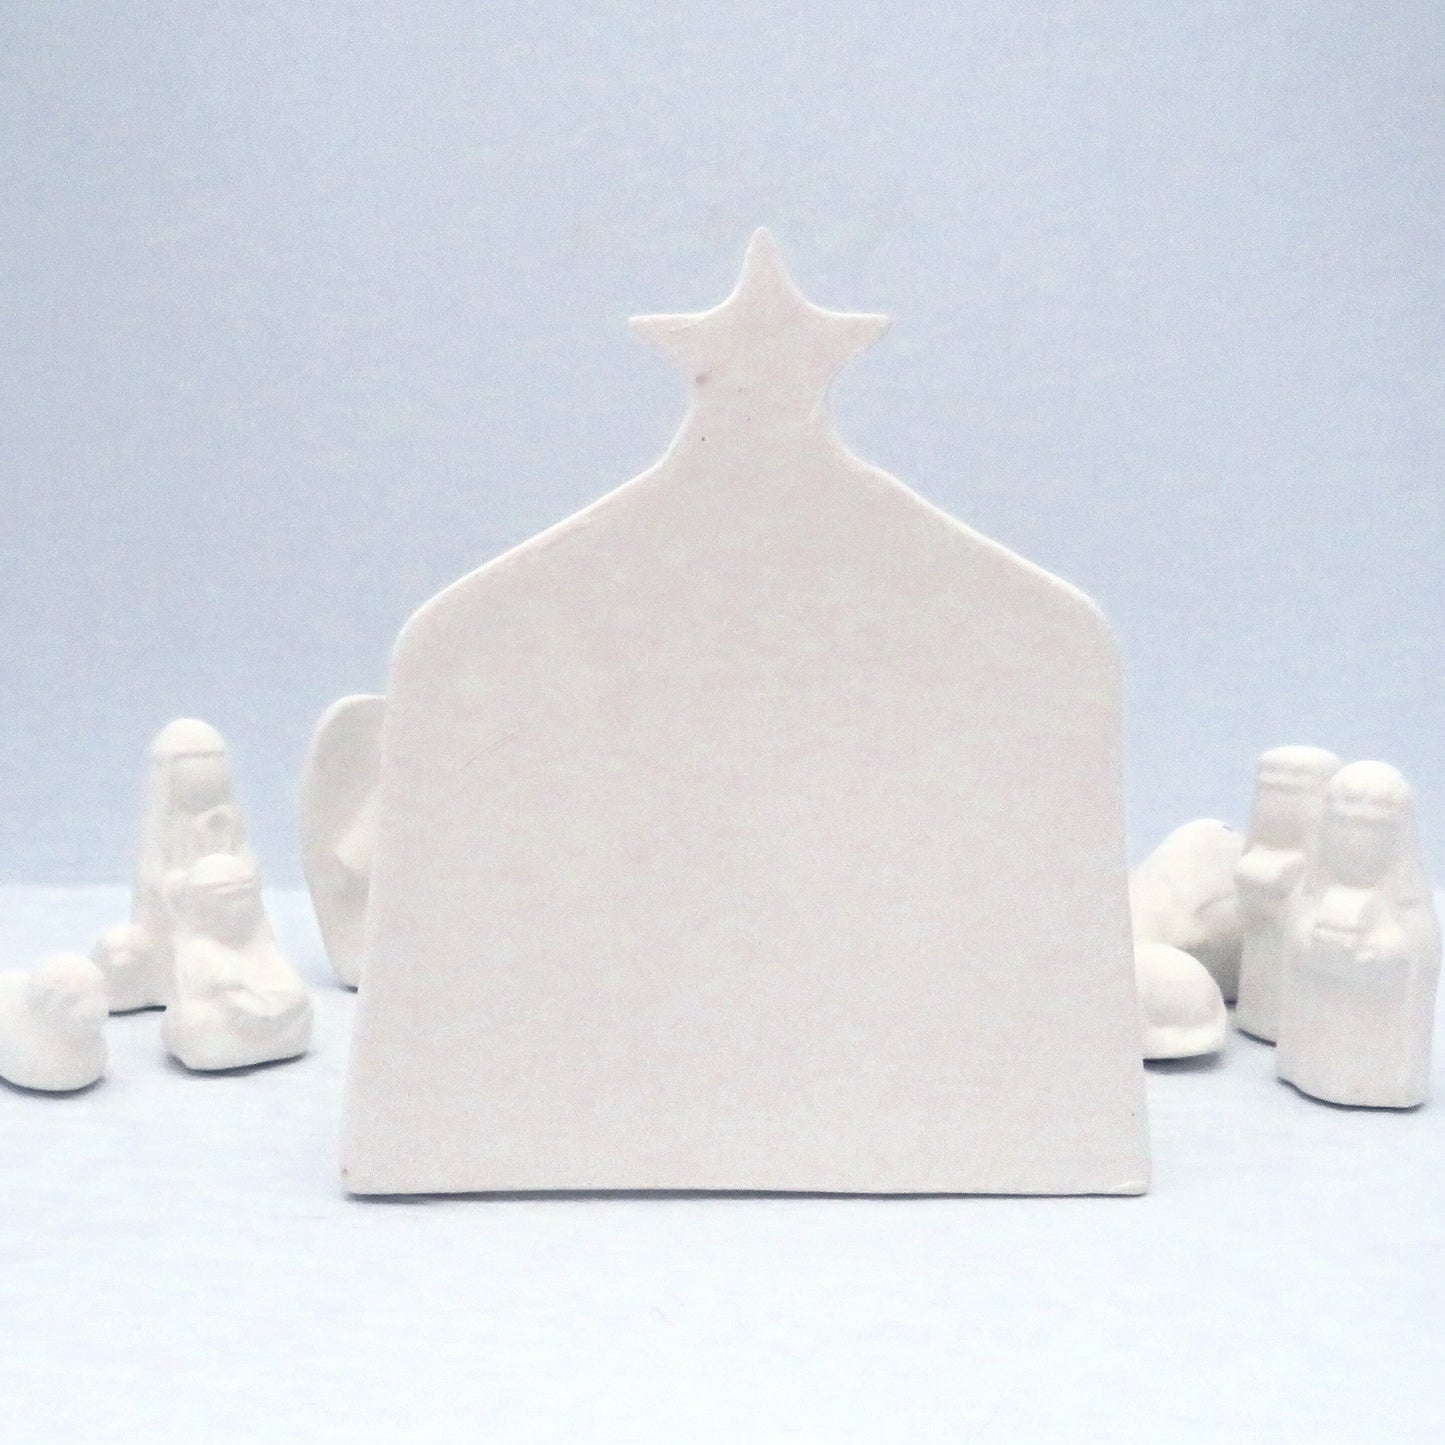 Handmade Ready to Paint Christmas Ceramic Nativity Set / Ceramics to Paint / Unpainted Ceramic Bisque Christmas Scene / Christmas Decor